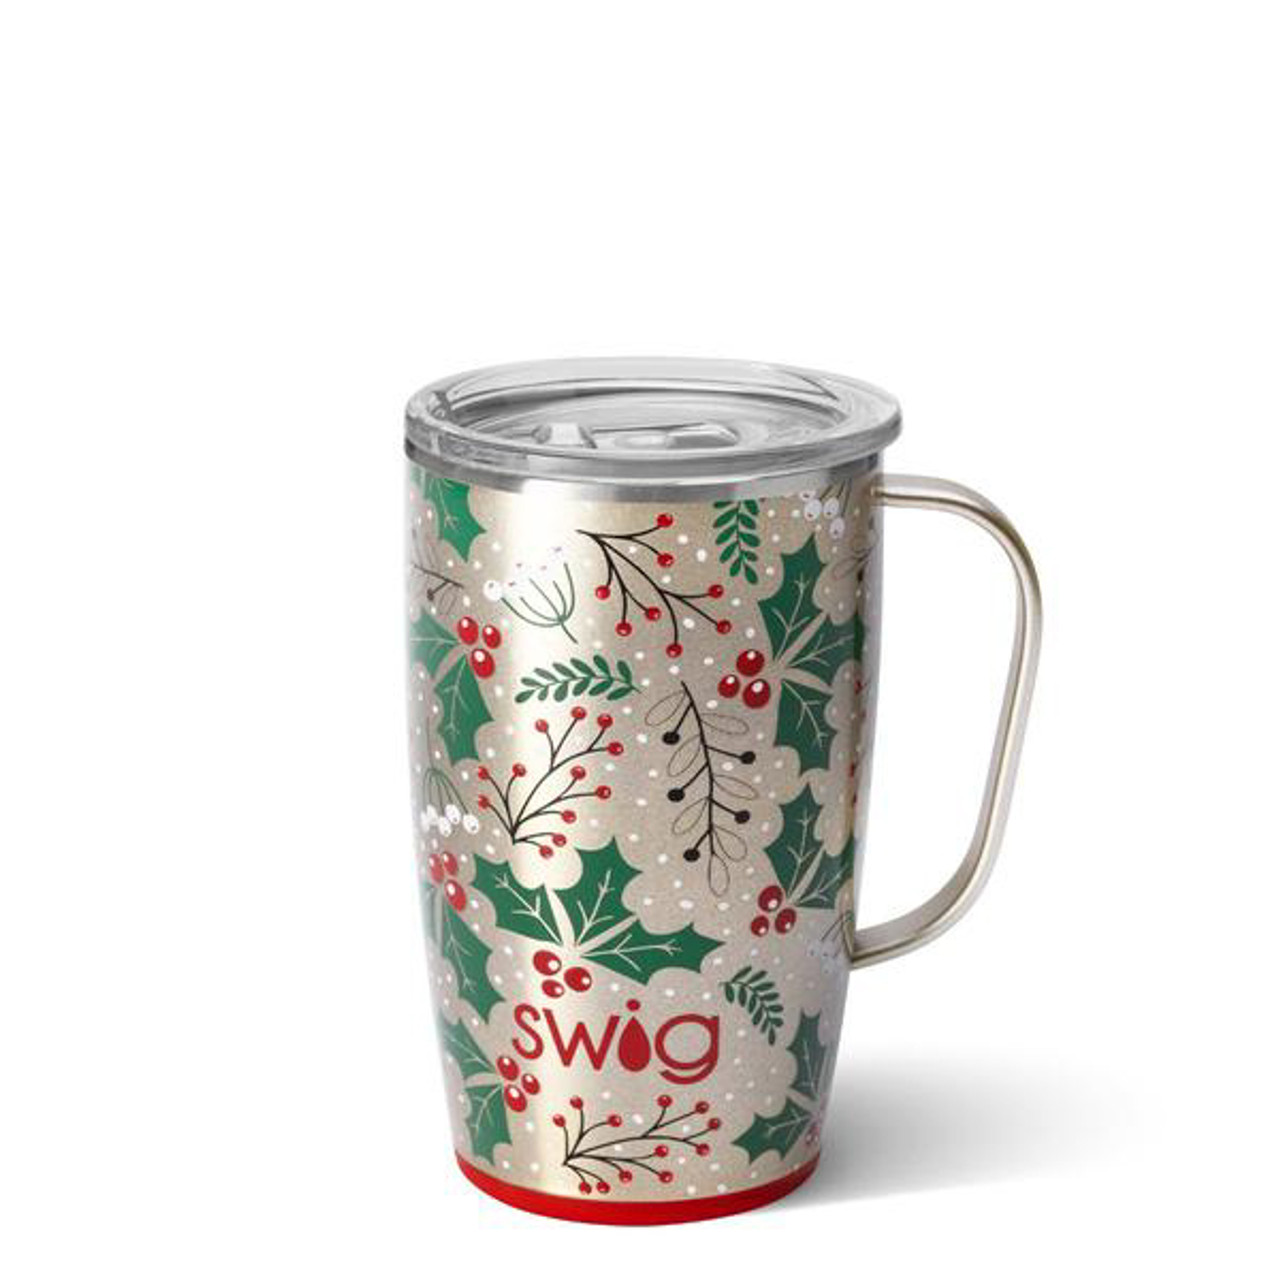 Swig 18oz. Travel Mug Home Fir The Holidays